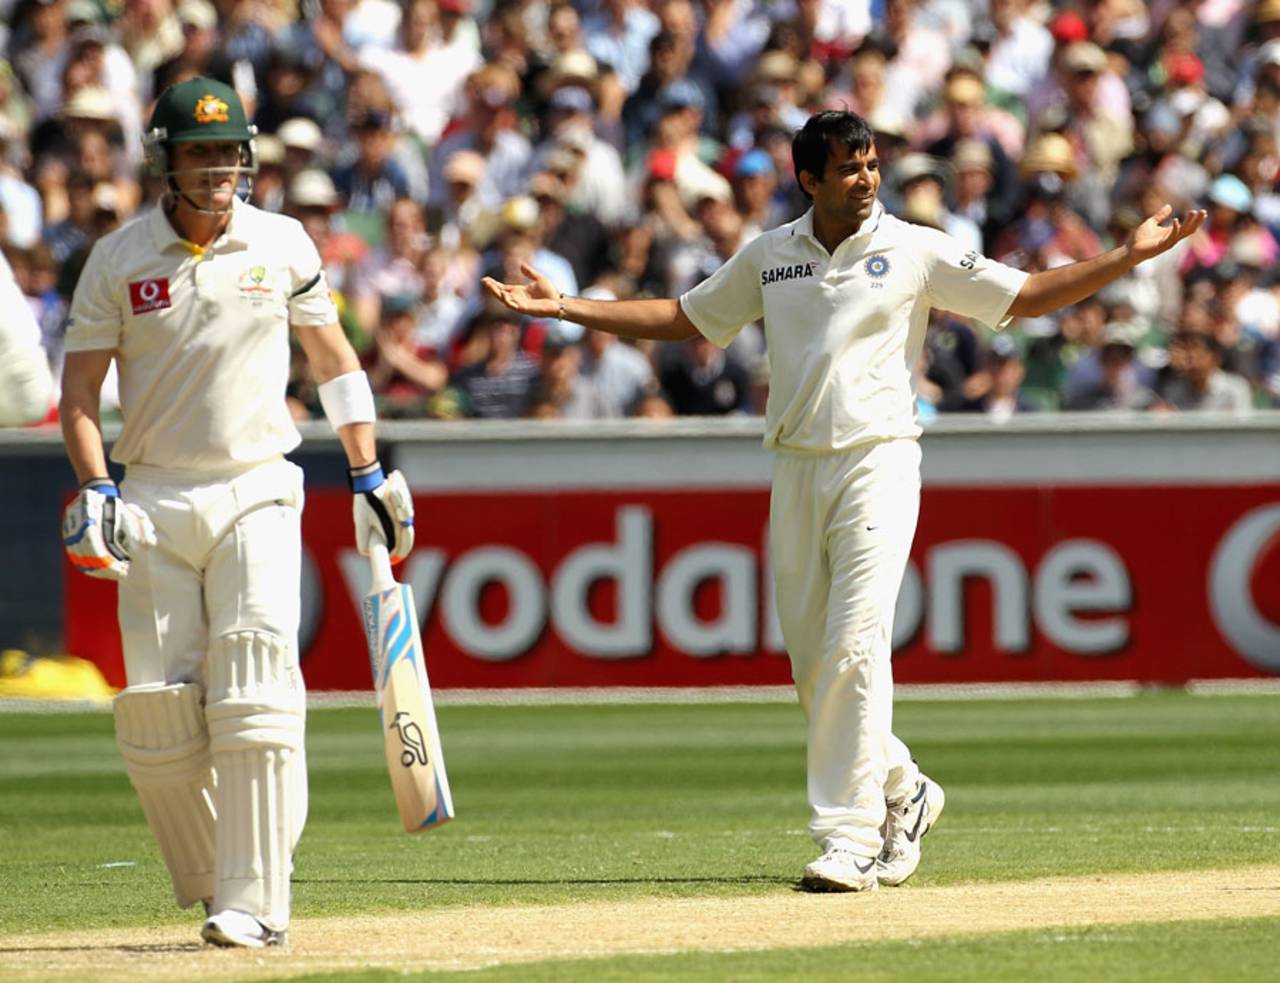 Zaheer Khan got rid of Brad Haddin early on day two, Australia v India, 1st Test, Melbourne, 2nd day, December 27, 2011